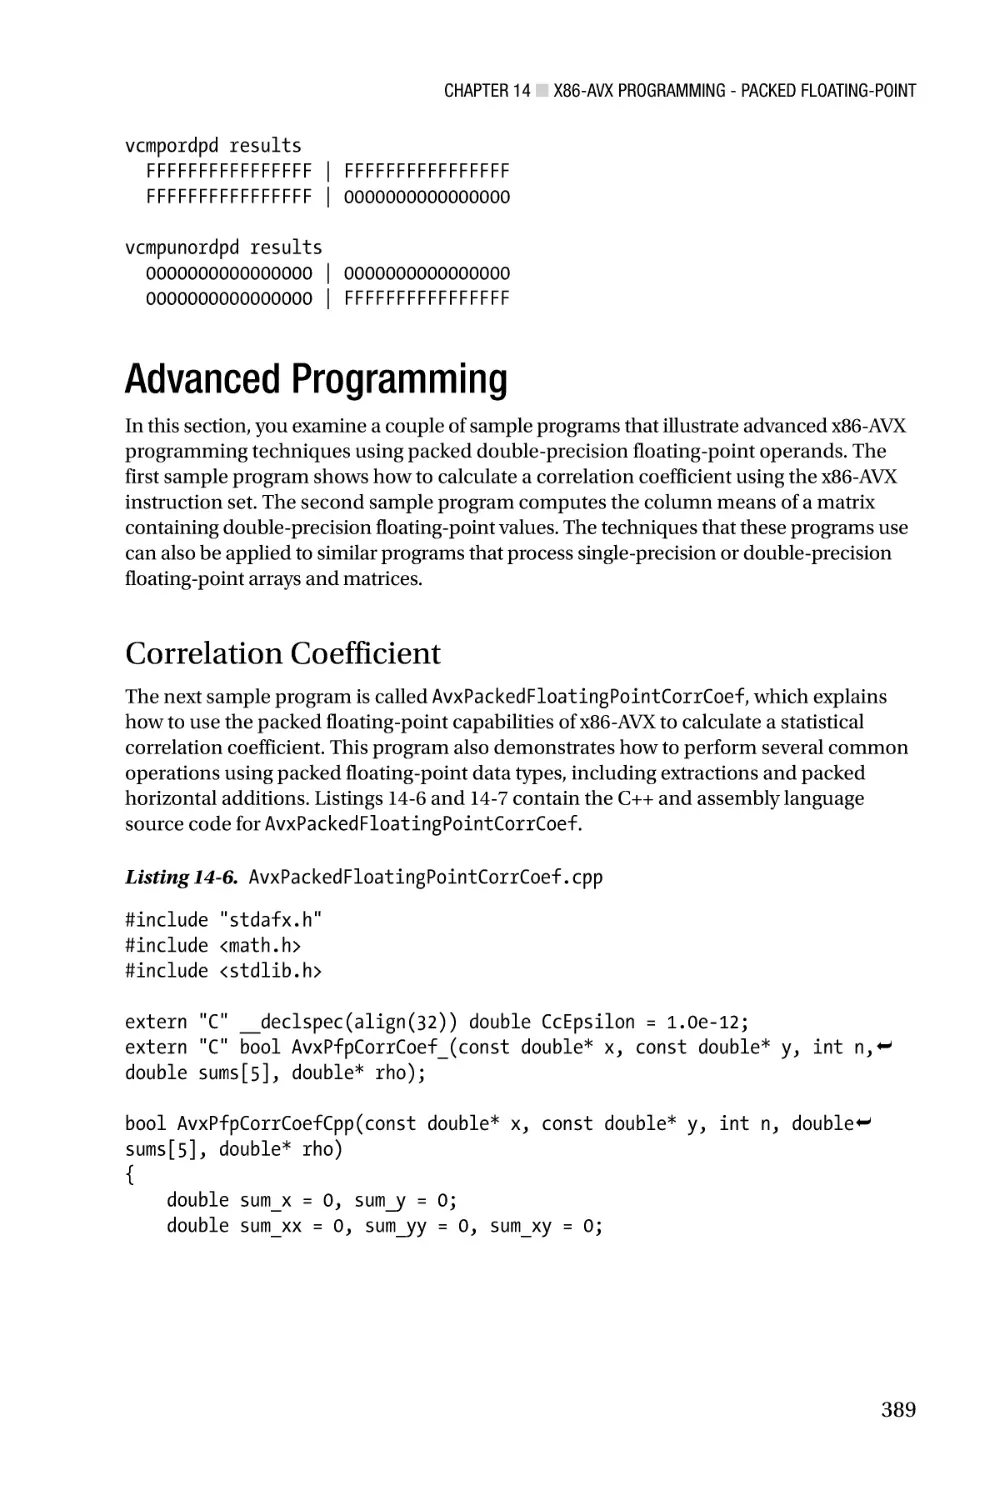 Advanced Programming
Correlation Coefficient